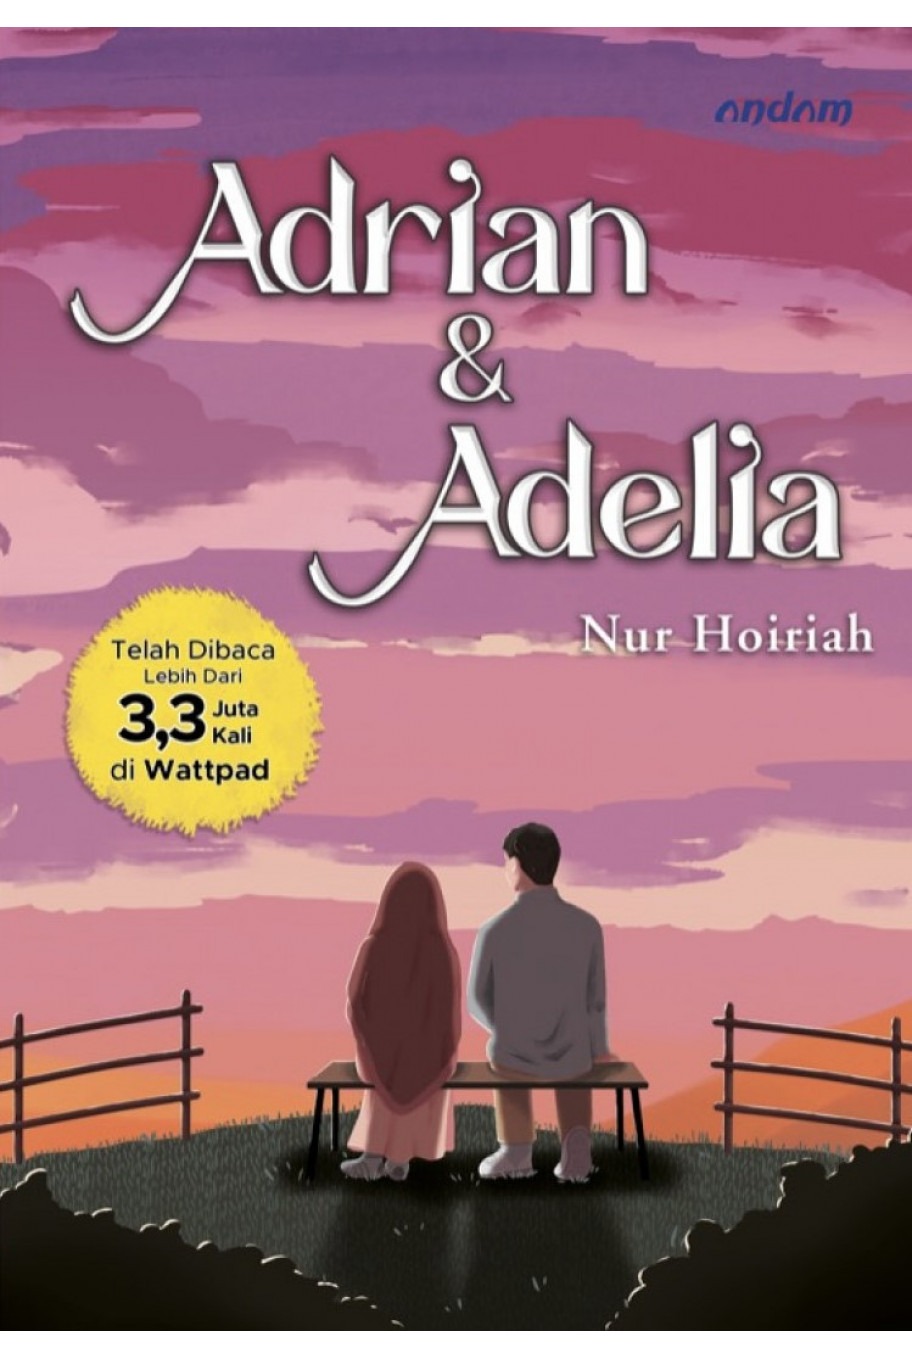 Adrian dan Adelia